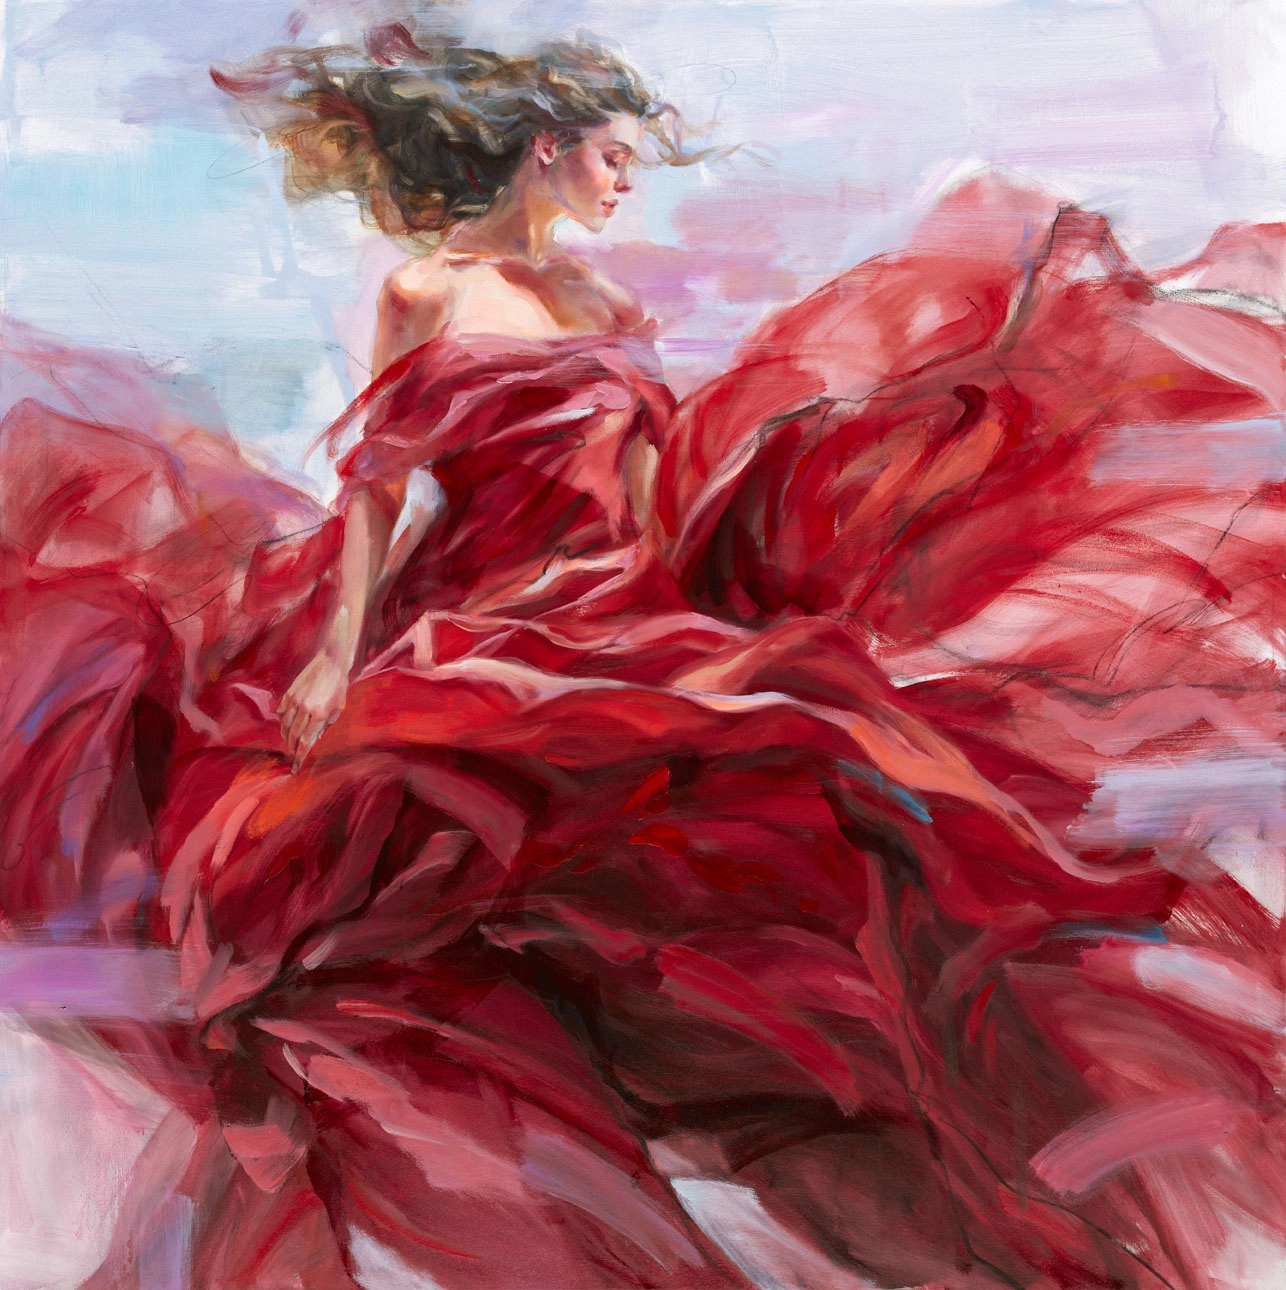 Anna Razumovskaya In a Scarlet Cloud 2 Hand-Embellished Giclee on Canvas